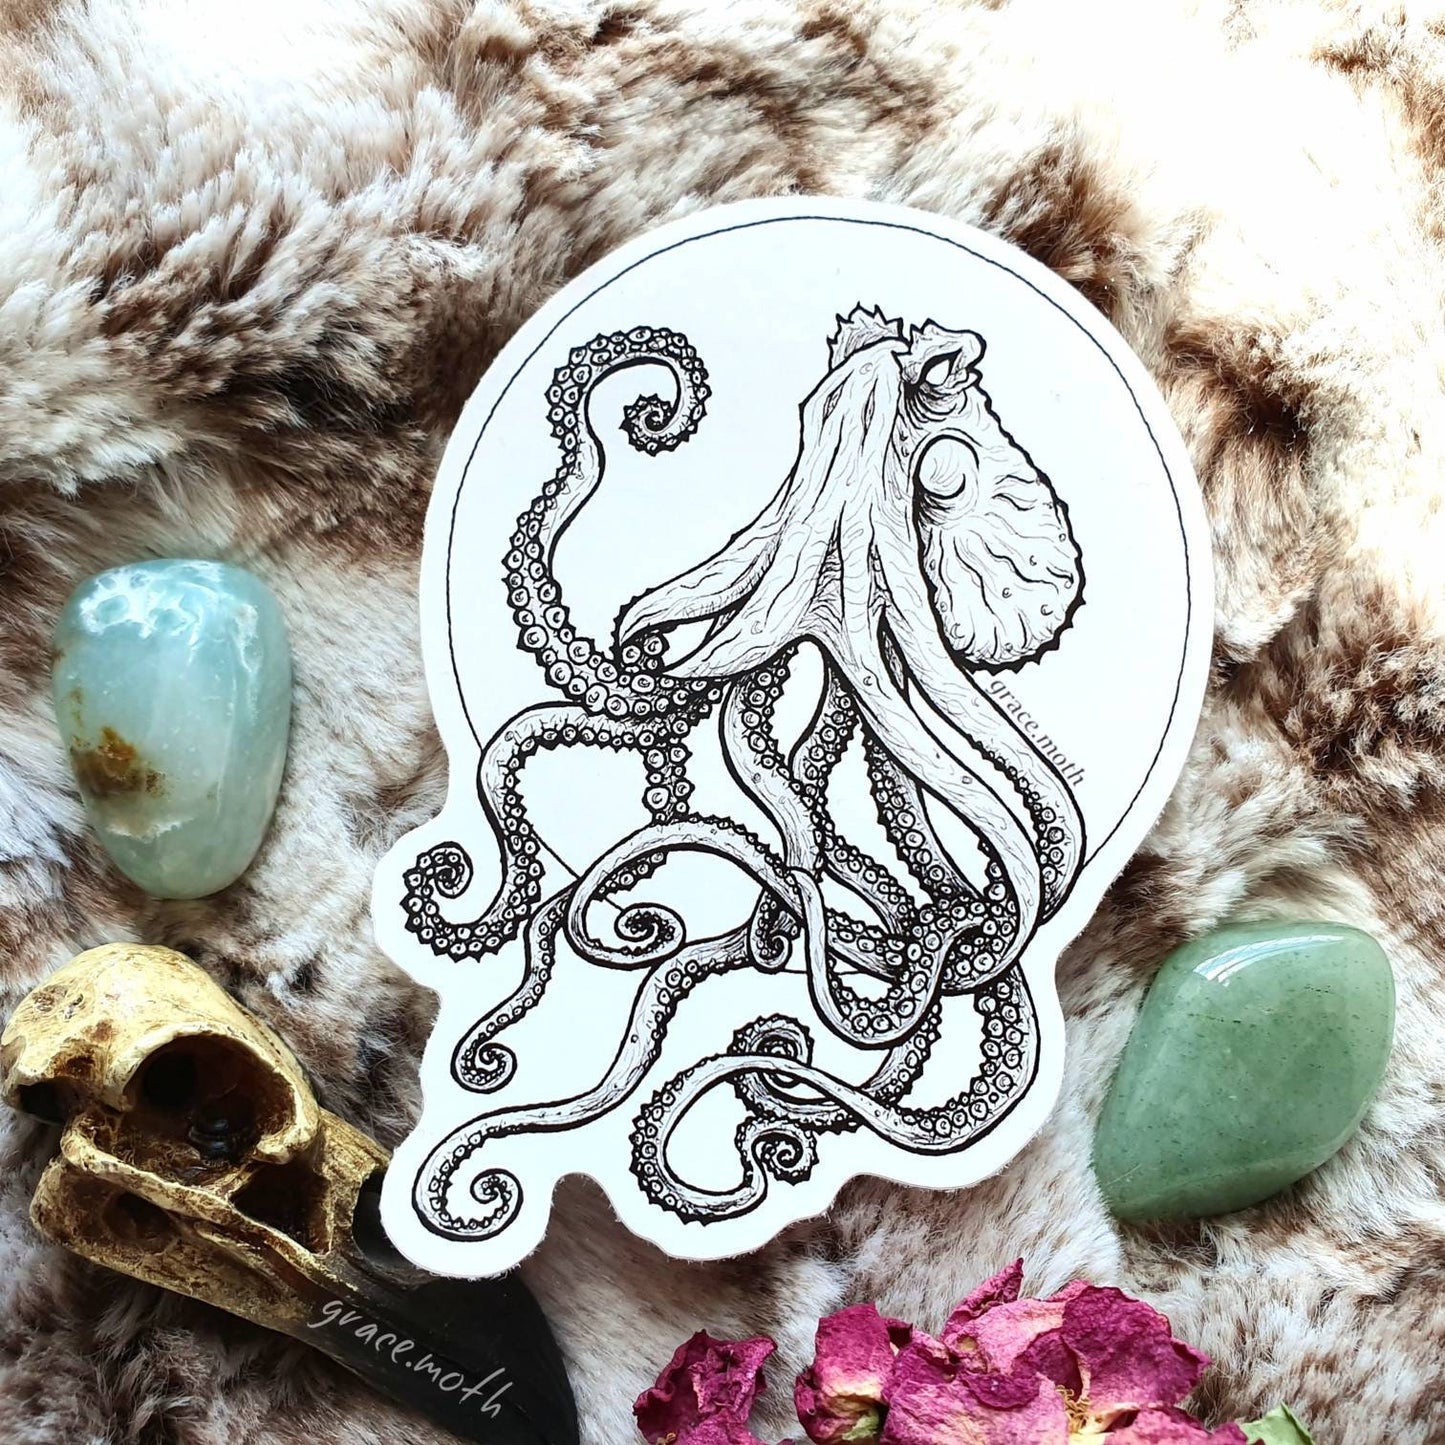 Octopus - Vinyl Sticker 10cm by 7.5cm